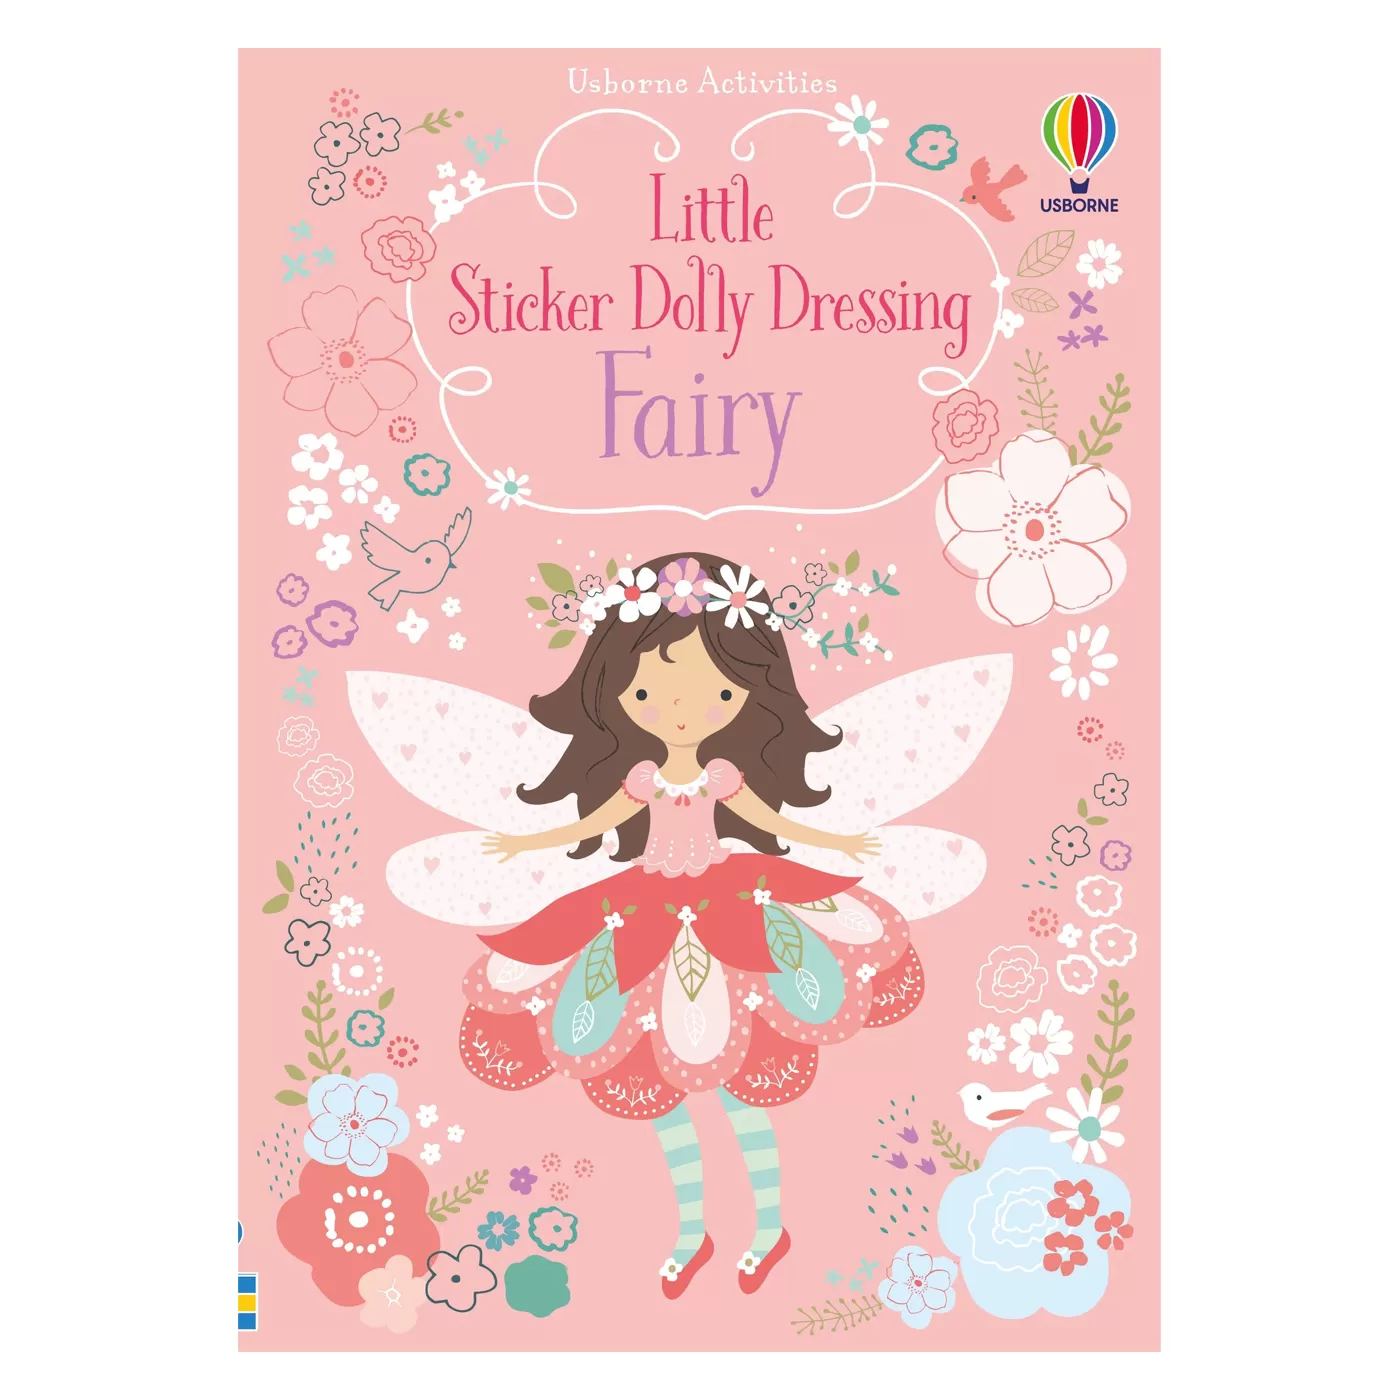  Little Sticker Dolly Dressing Fairy